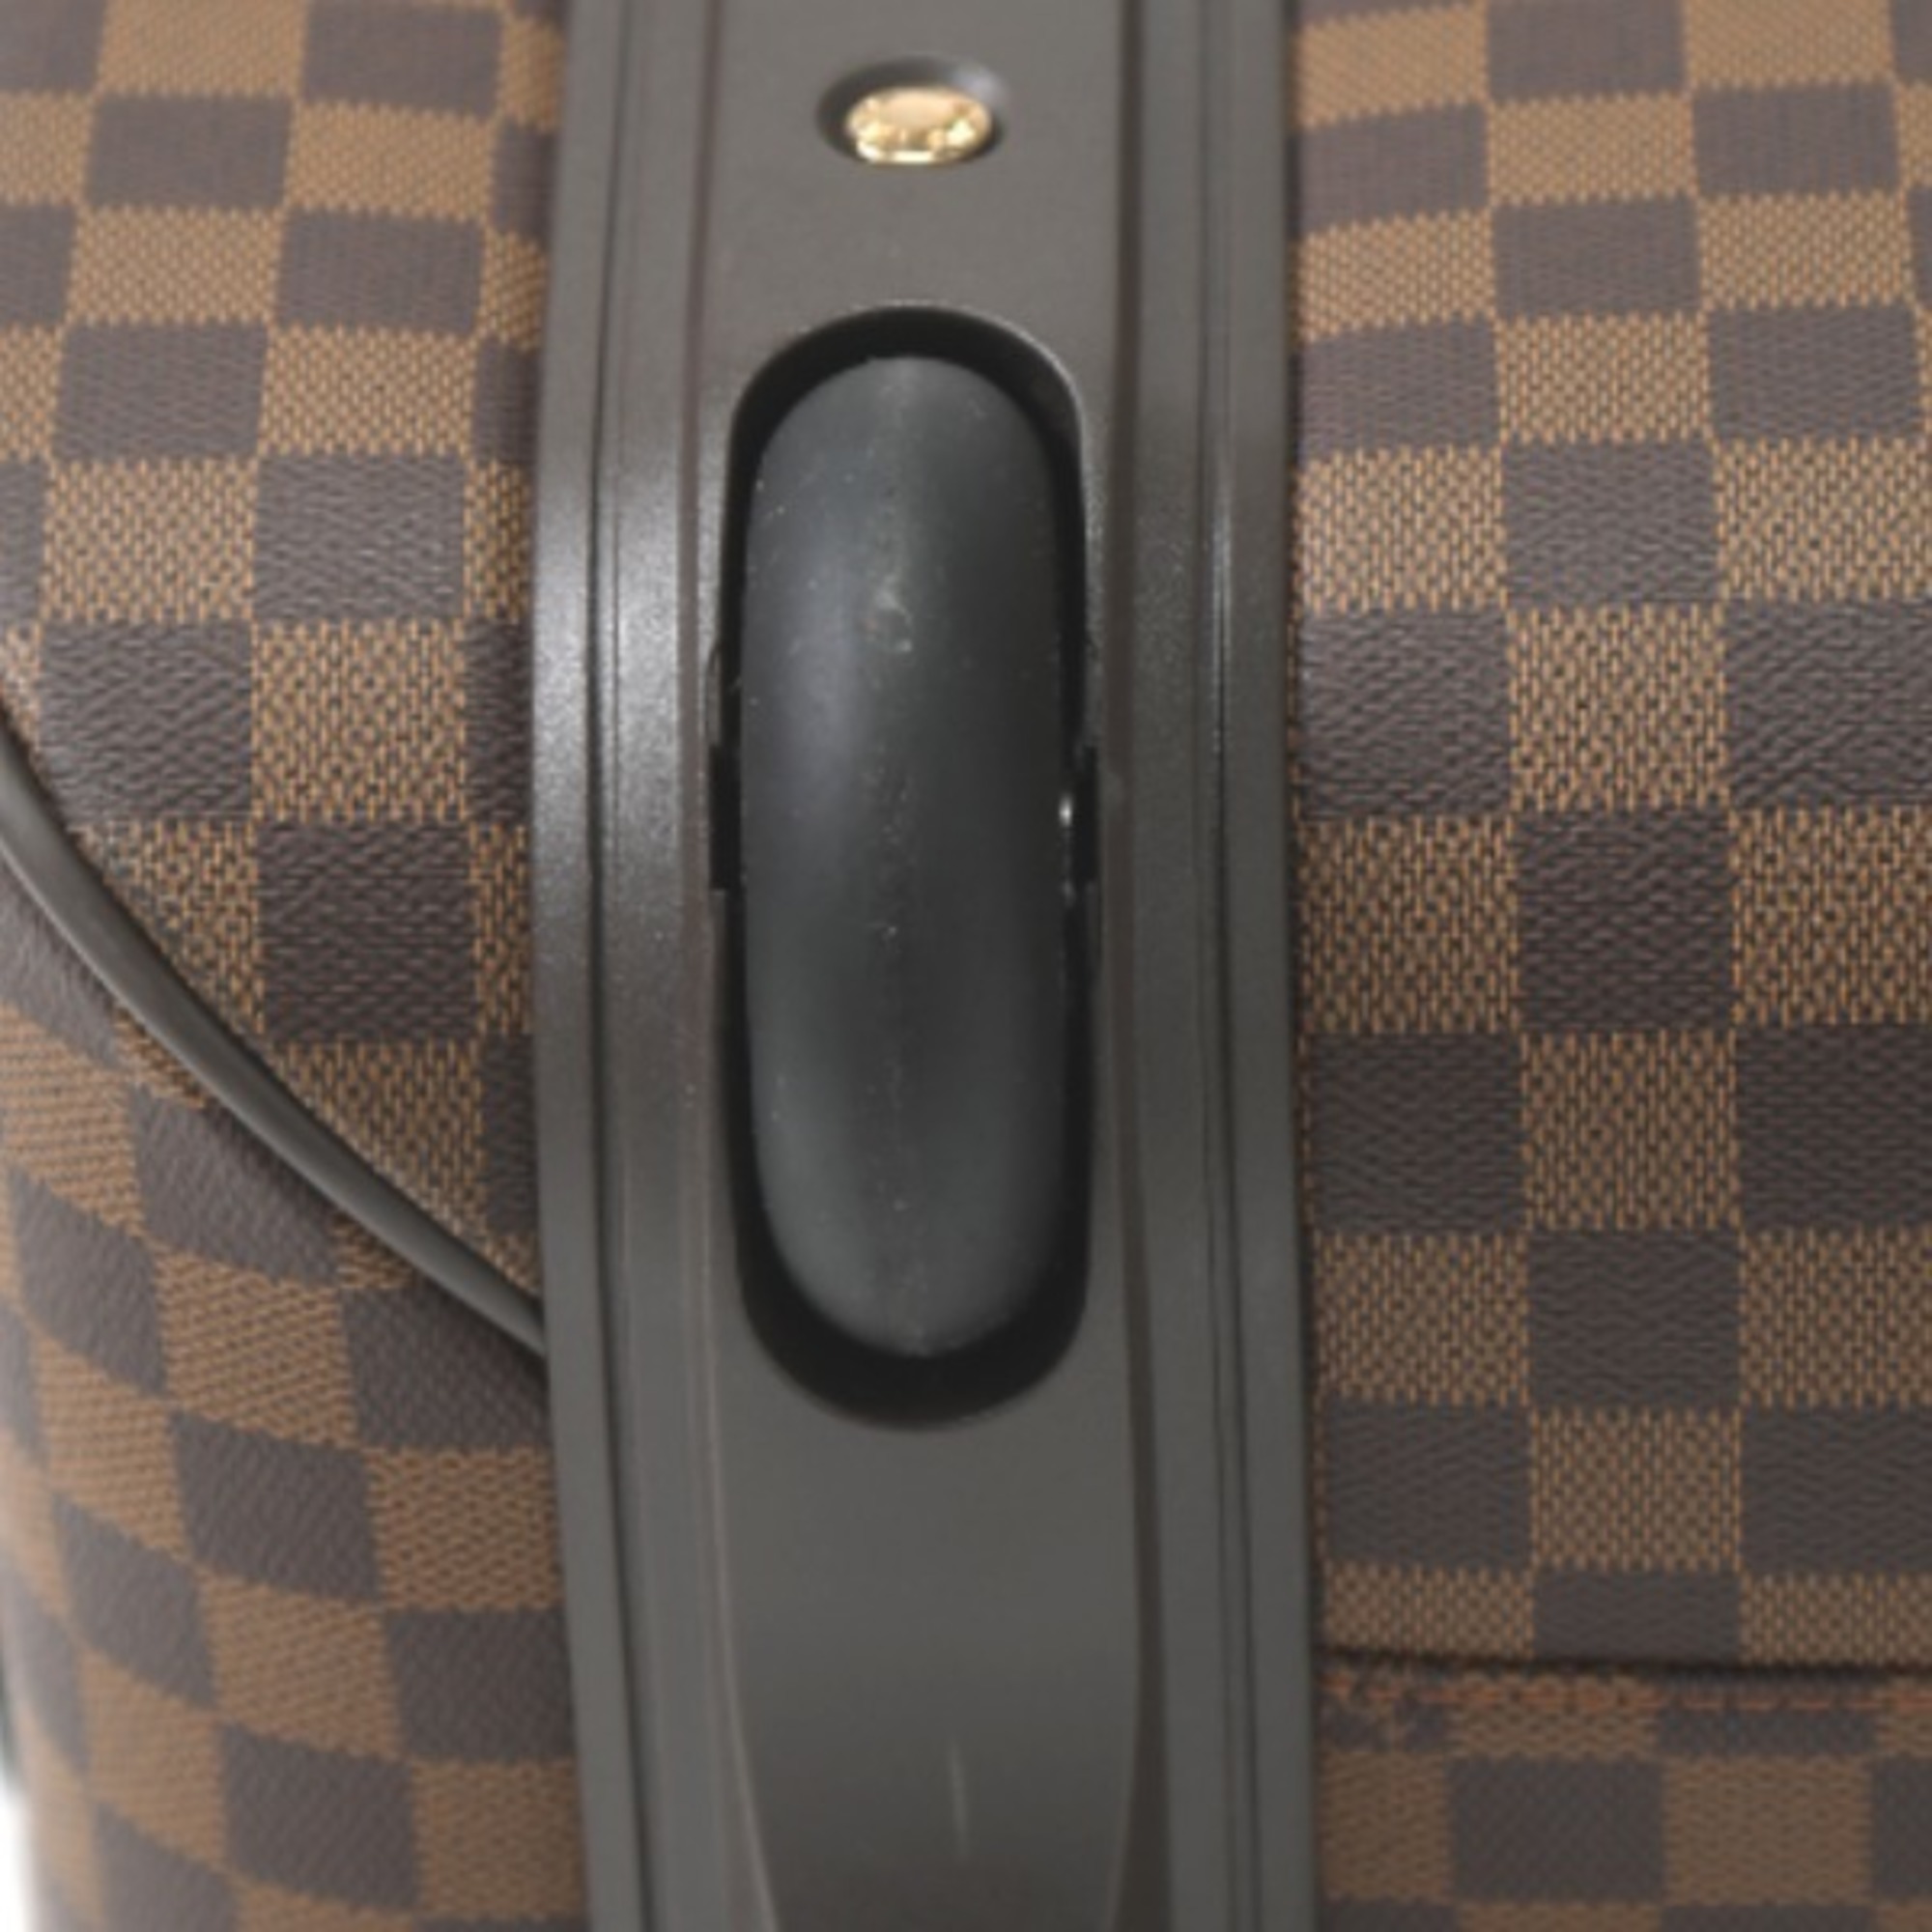 LOUIS VUITTON Travel bag with wheels Damier Pegas 55 N23294 Louis Vuitton Brown Carry LV